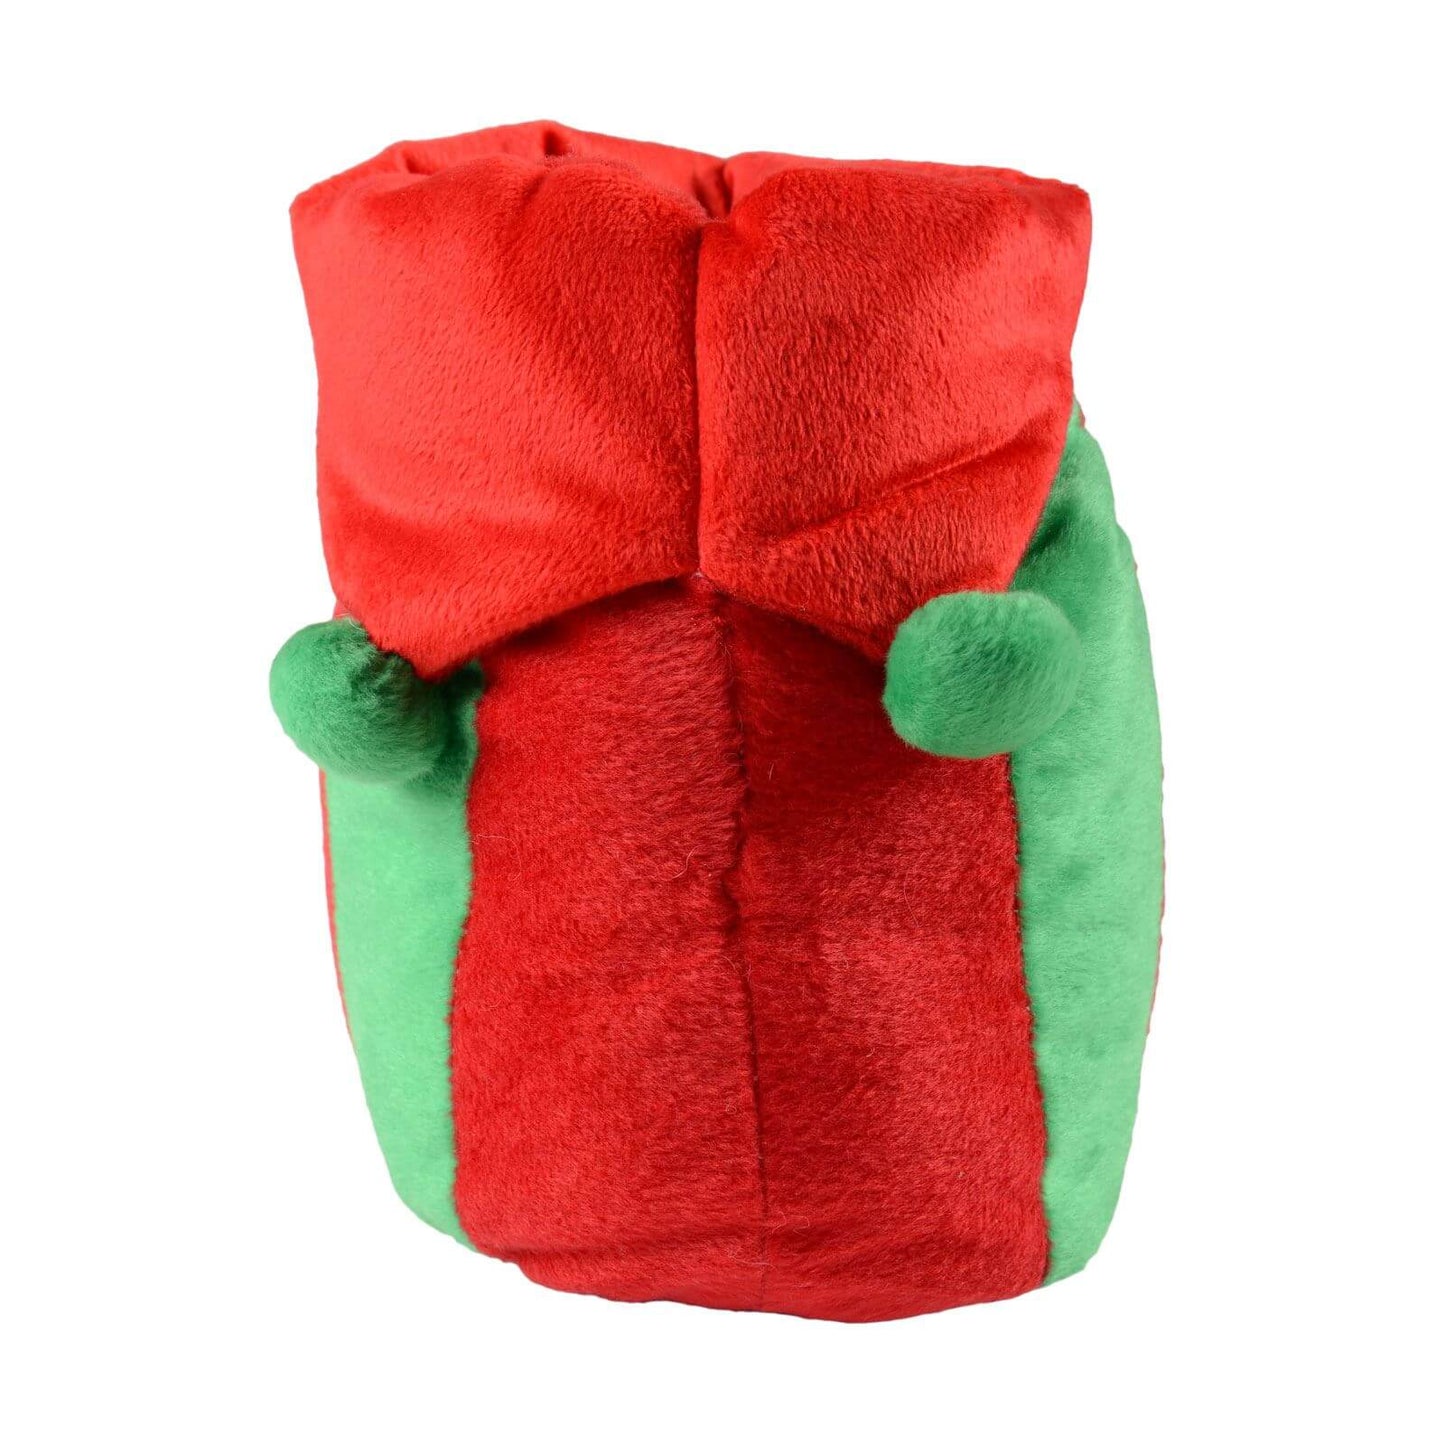 Mr Crimbo Adults Elf Slippers Novelty Green Red Jingle Bells